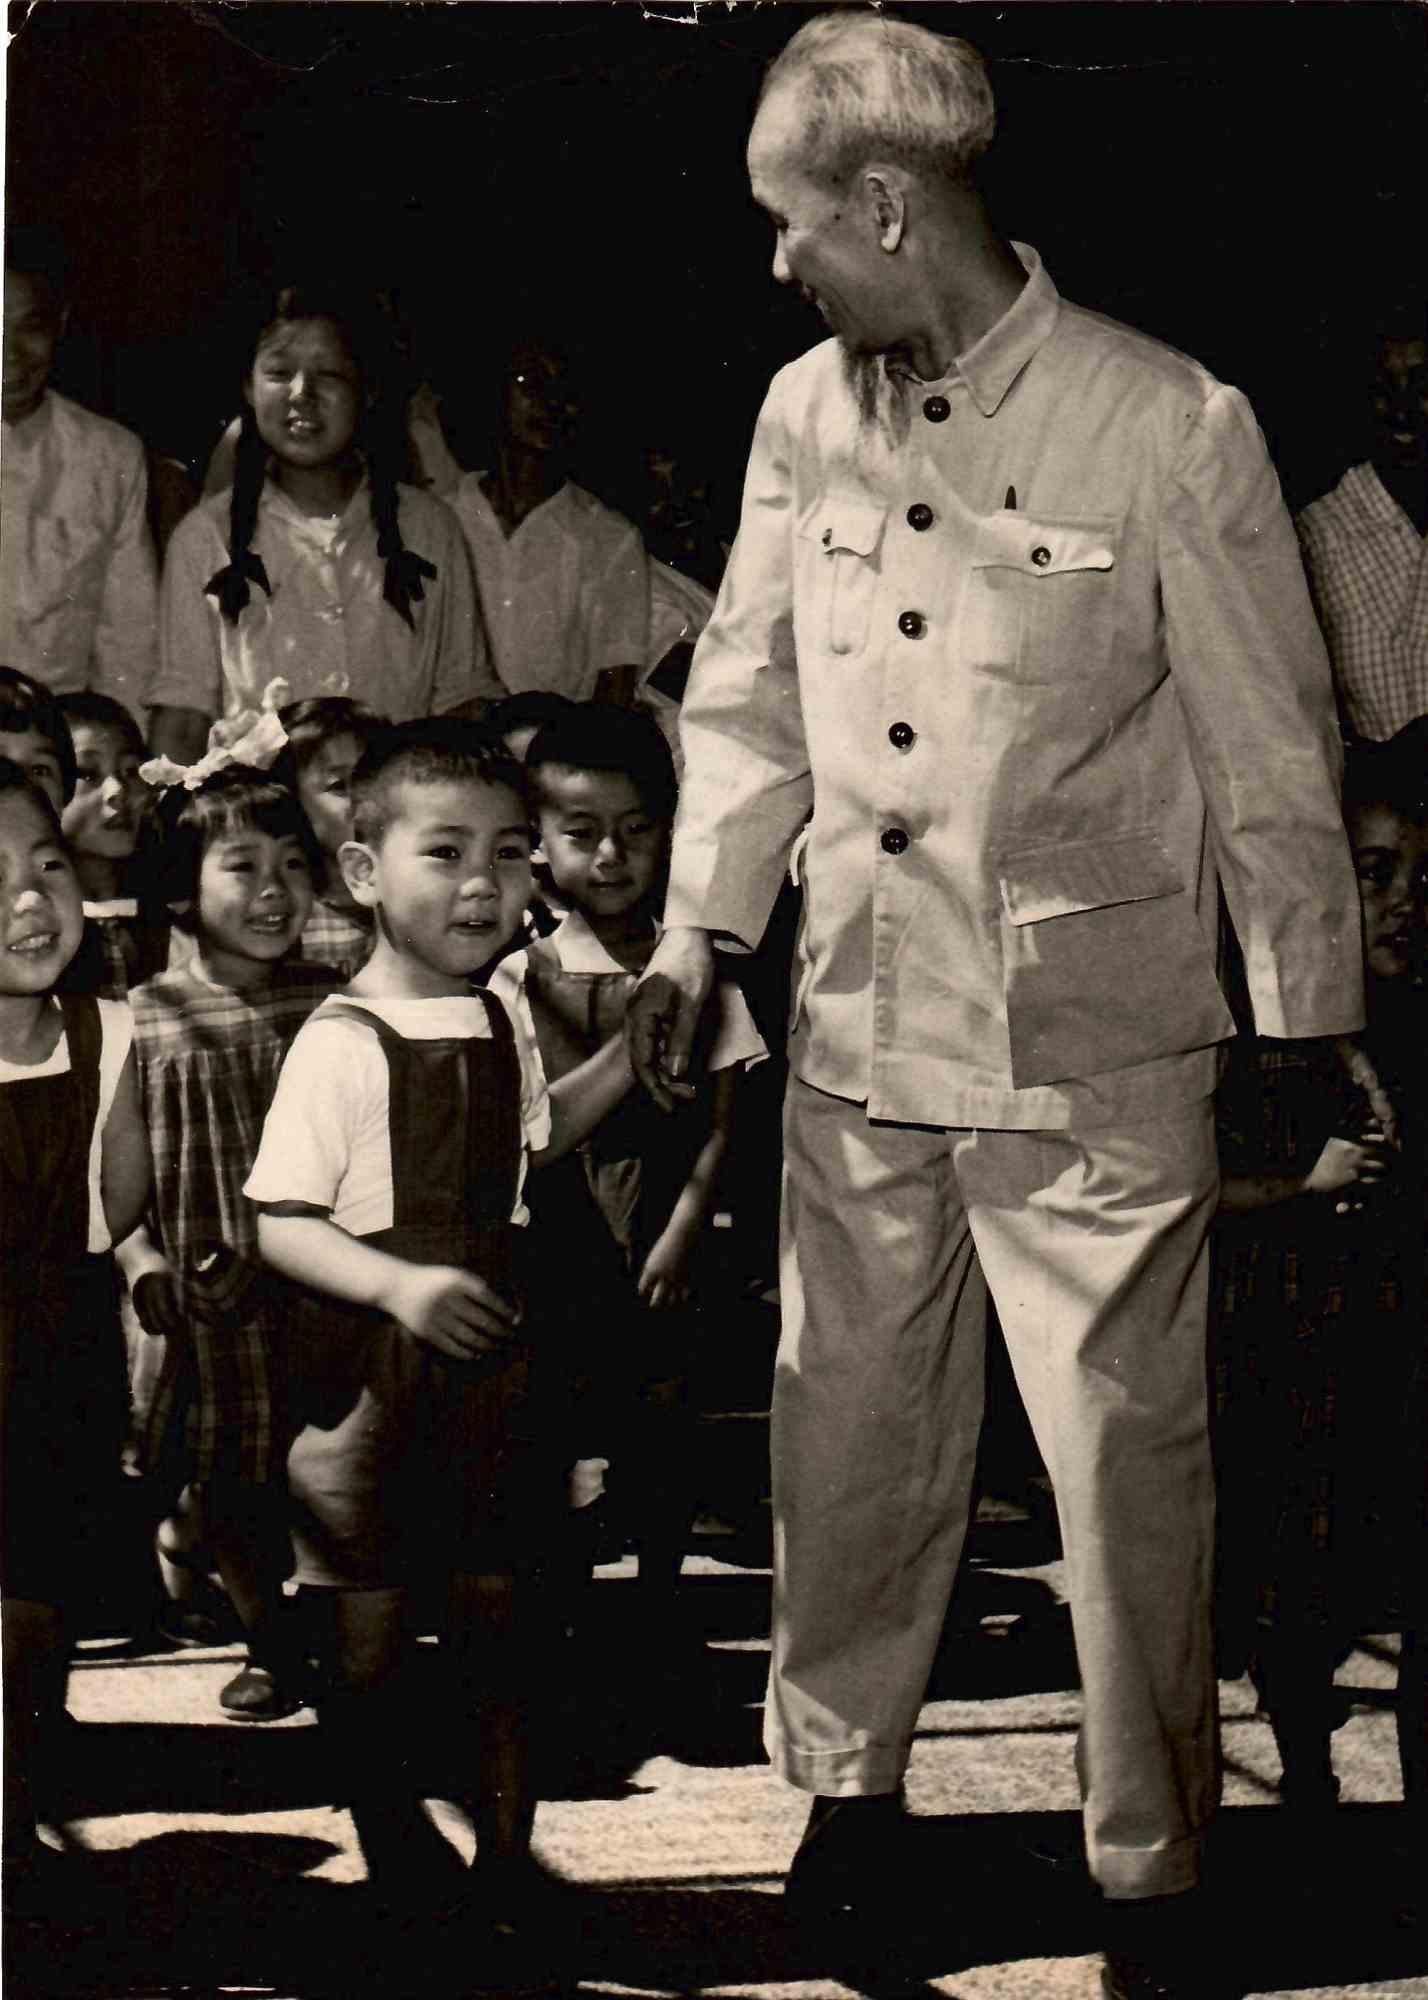 Unknown Portrait Photograph -  Ho Chi Minh with Children - Vintage B/W photo - 1960s